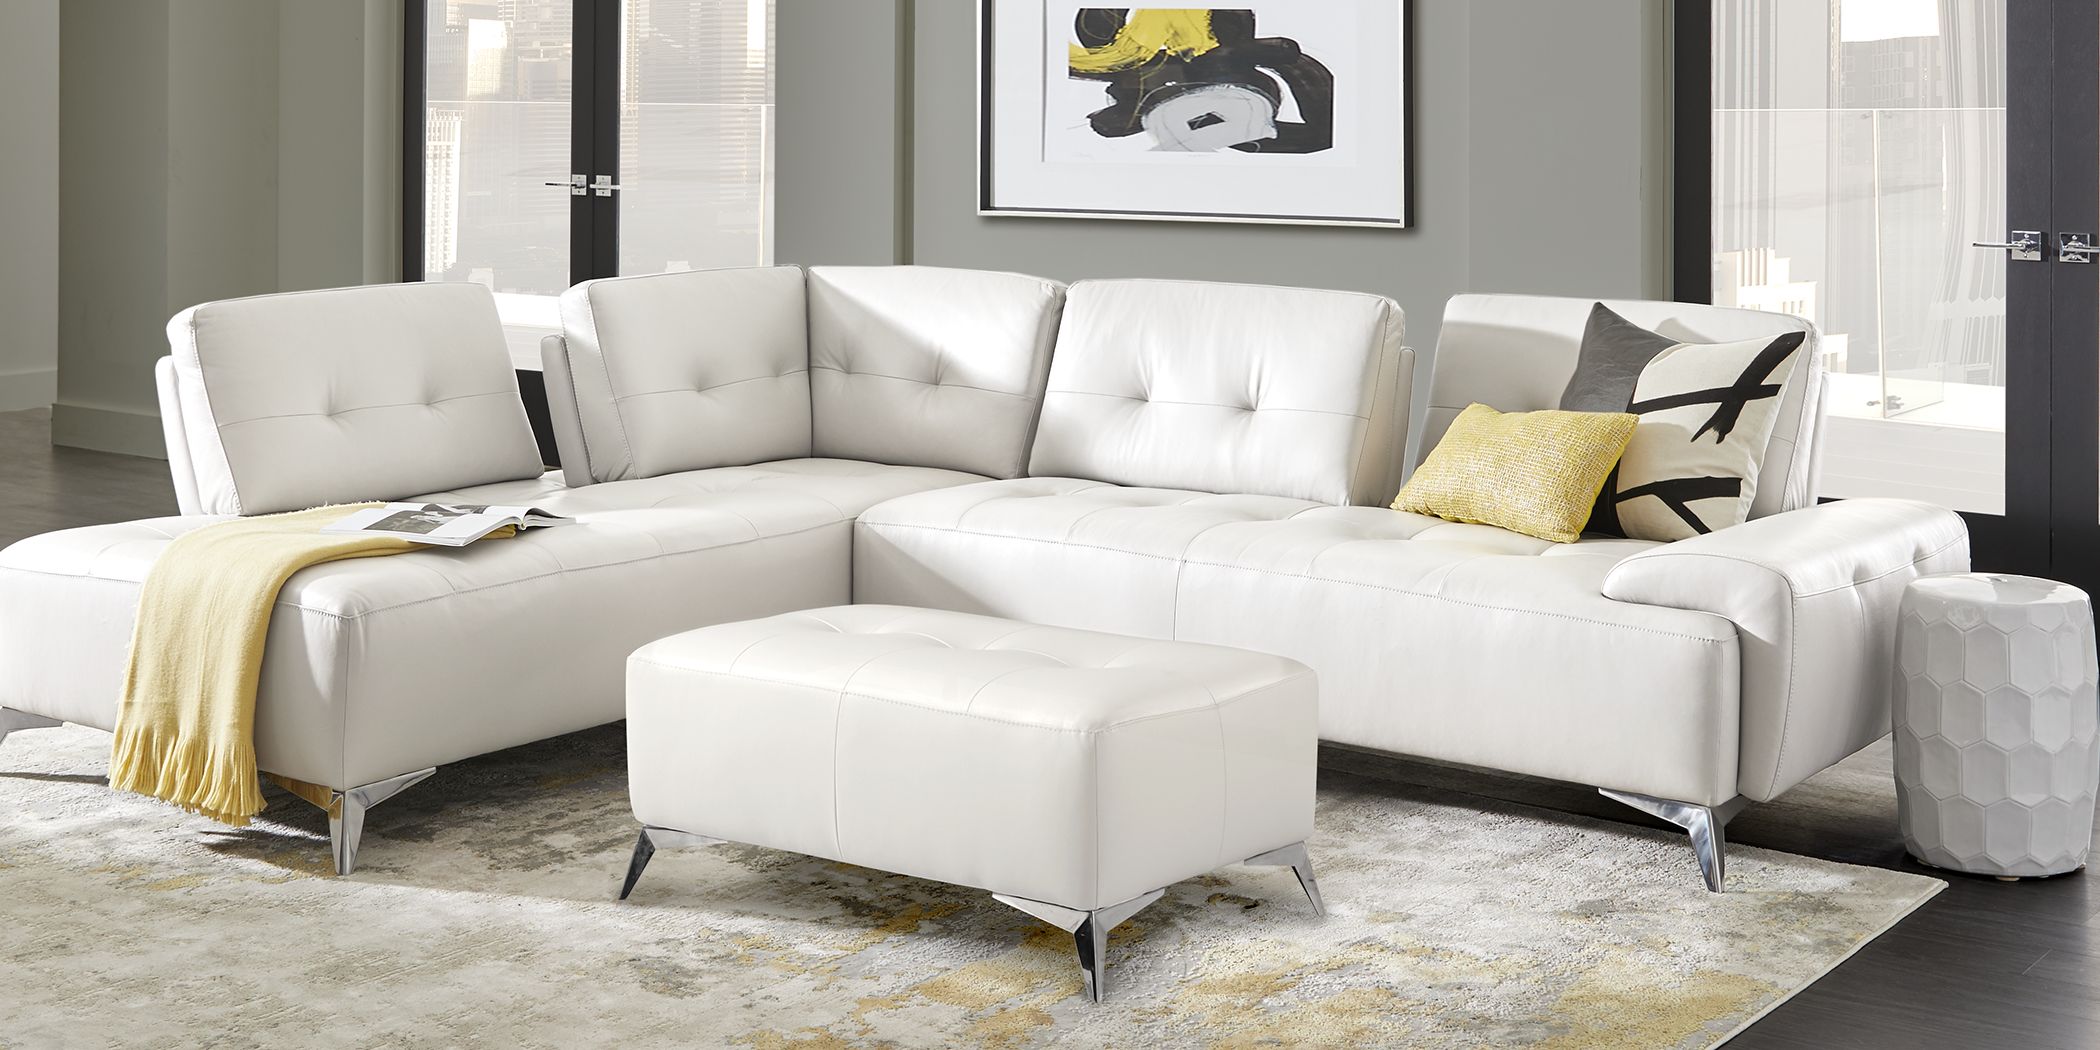 white leather living room decor